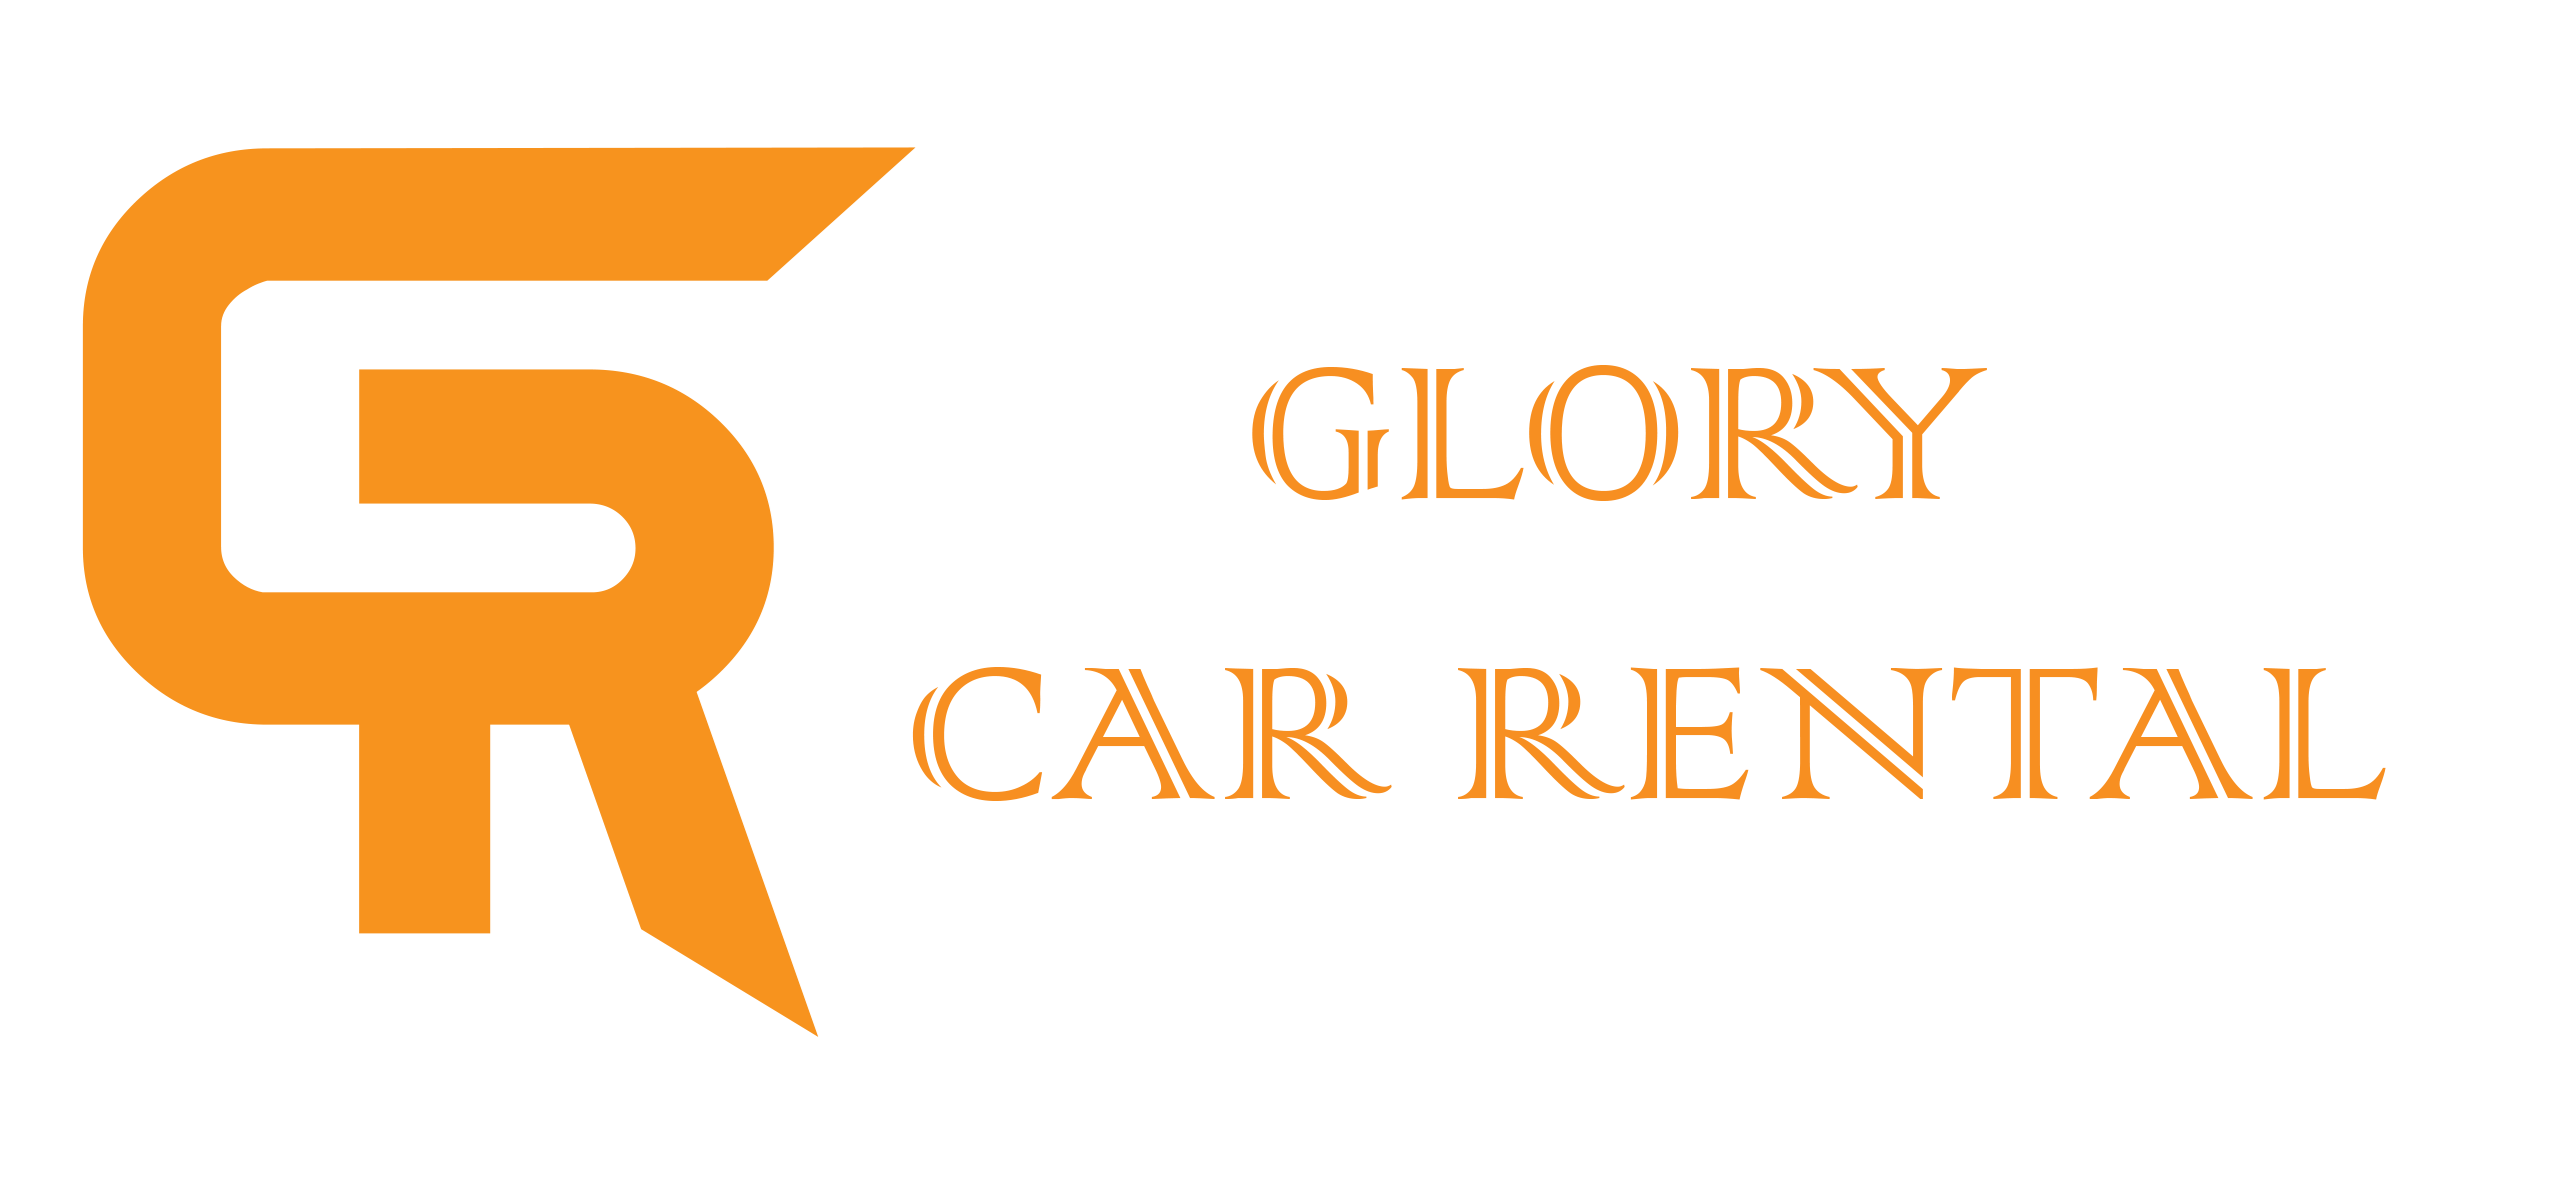 Glory Car Rental